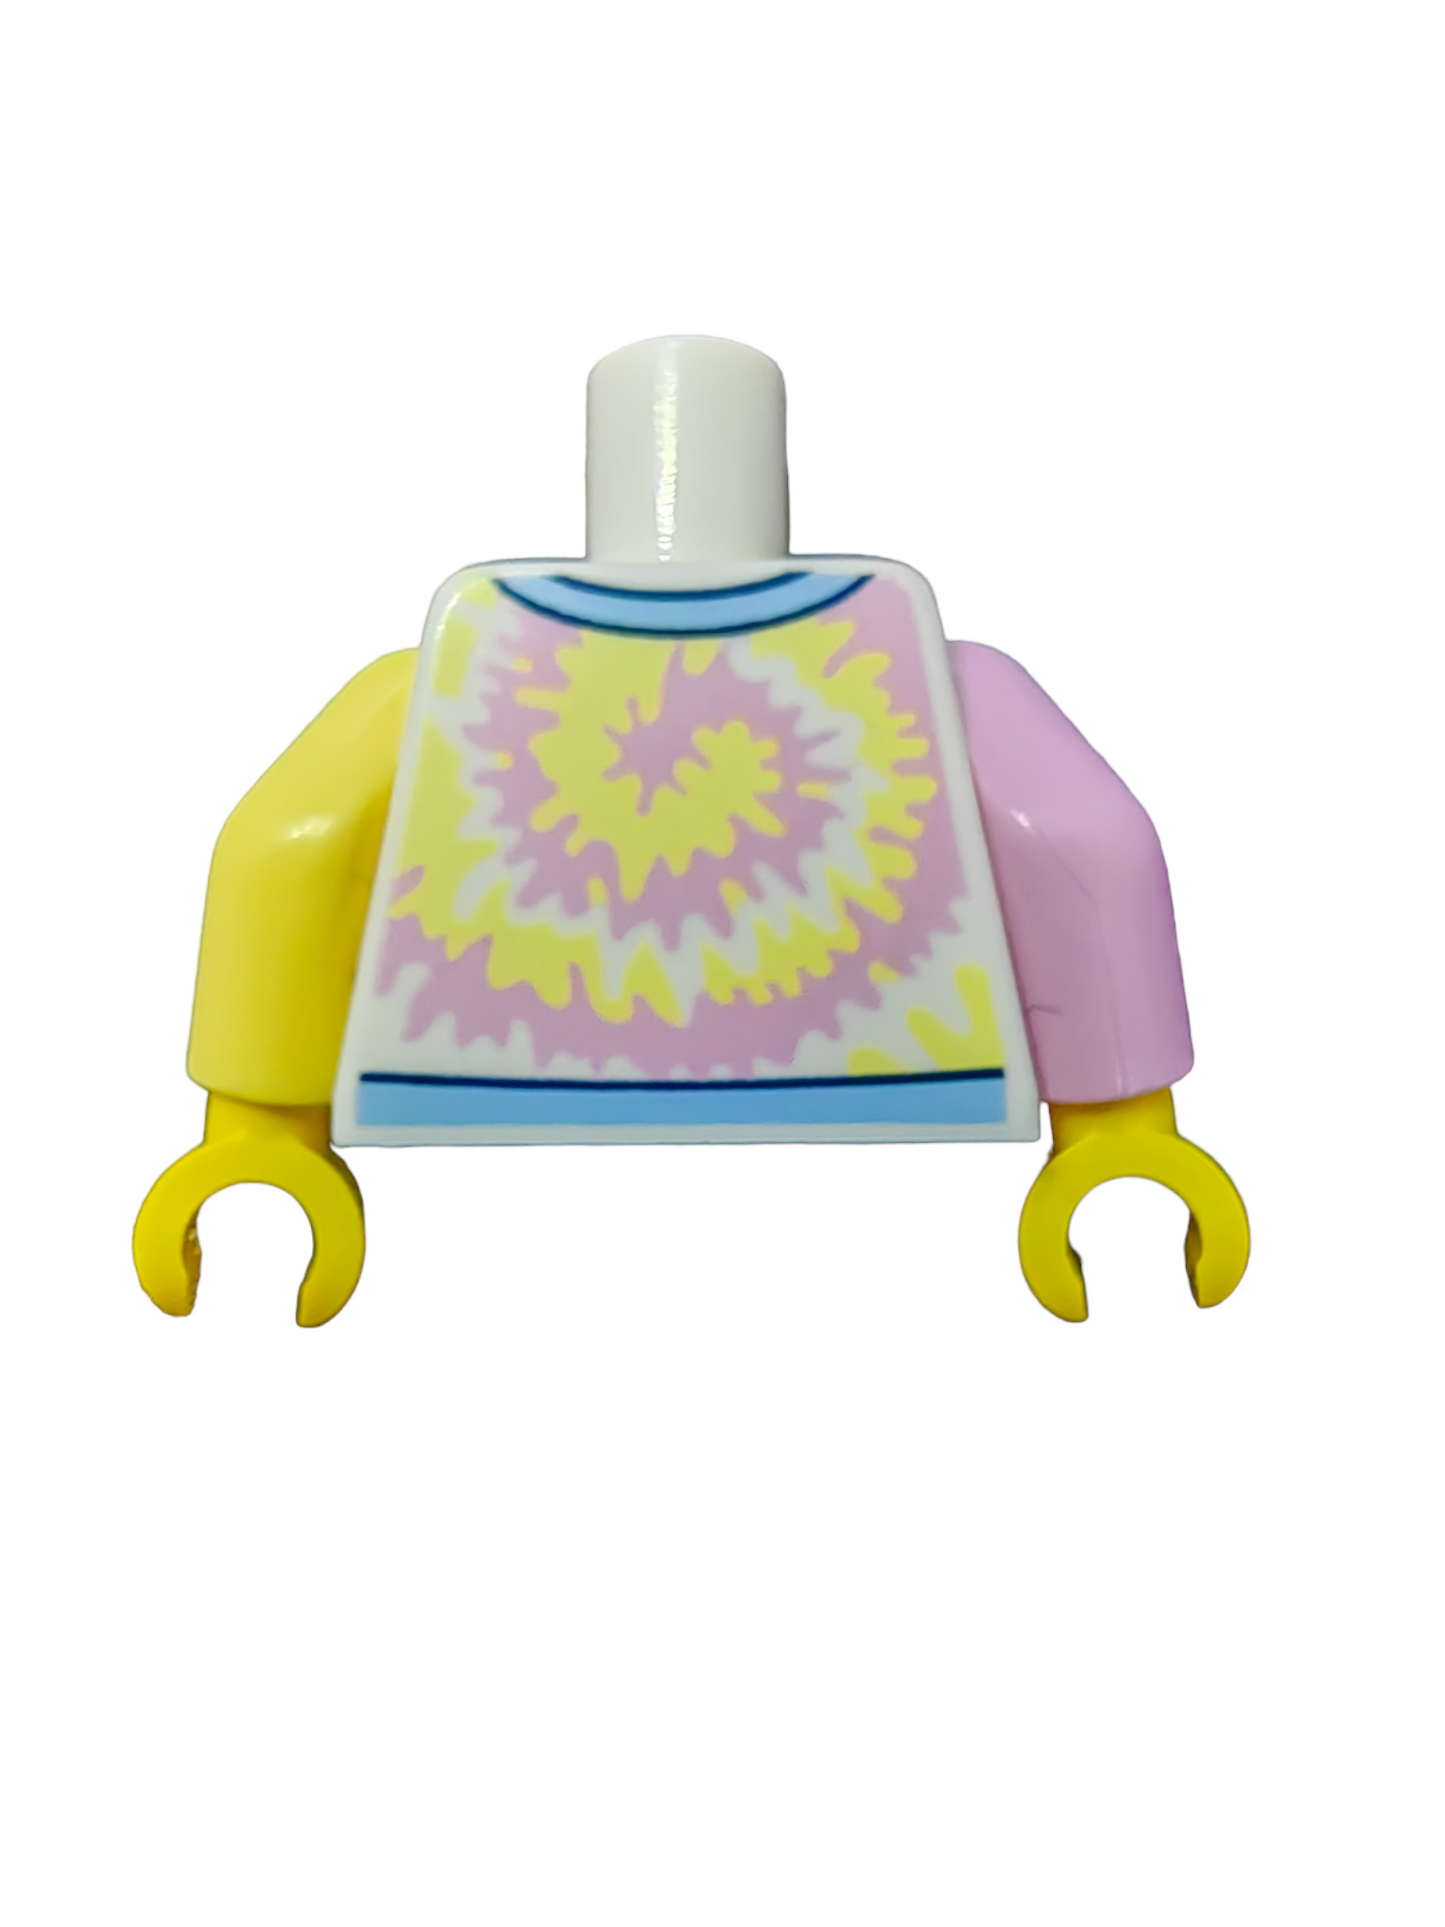 LEGO Torso, Pink and Light Yellow Swirl - UB1095